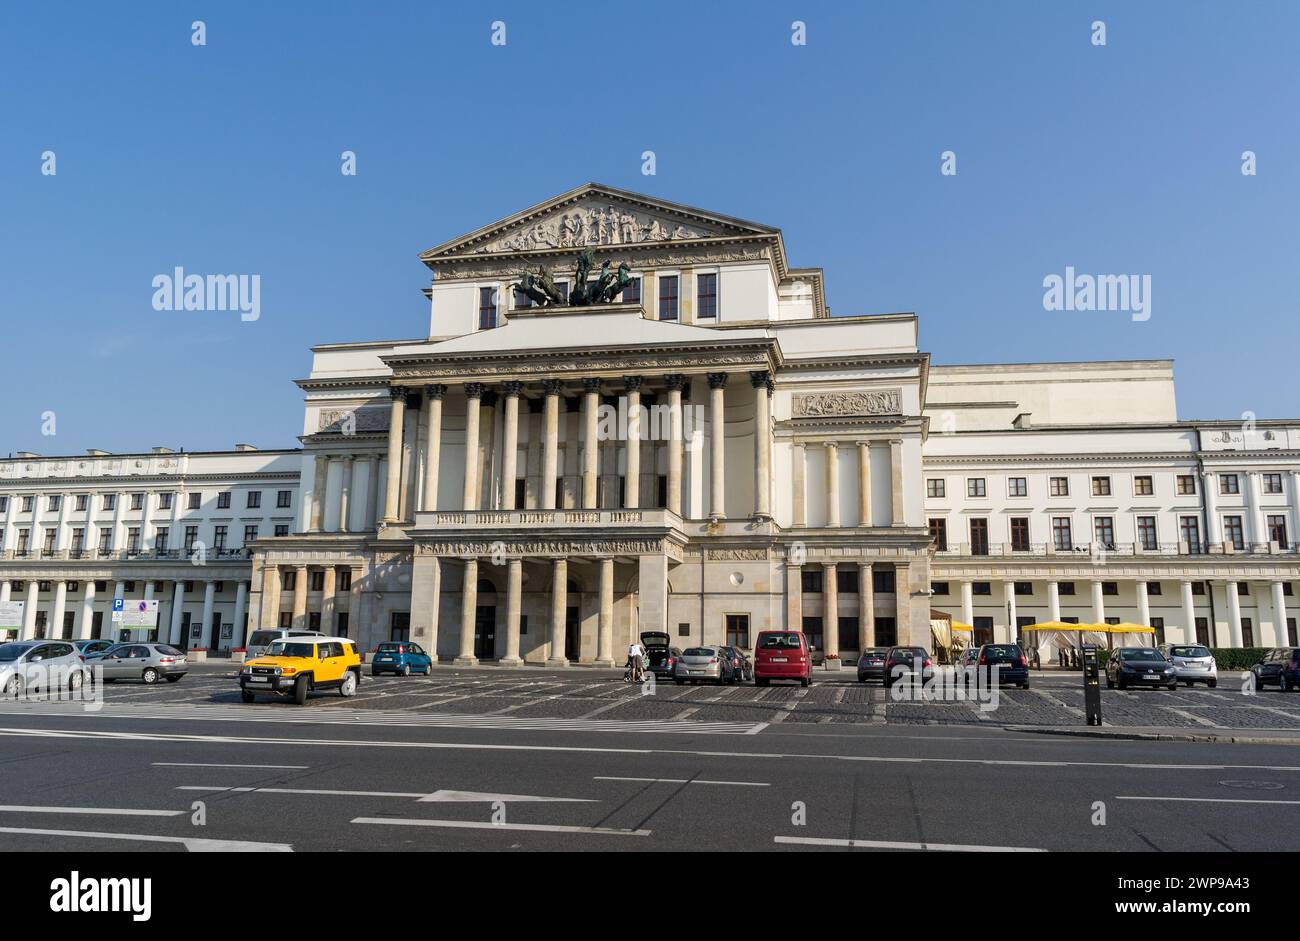 WARSAW, POLAND - AUGUST 9, 2015: Building of National Opera House (Opera Narodowa, Teatr Wielki) in Warsaw, Poland Stock Photo